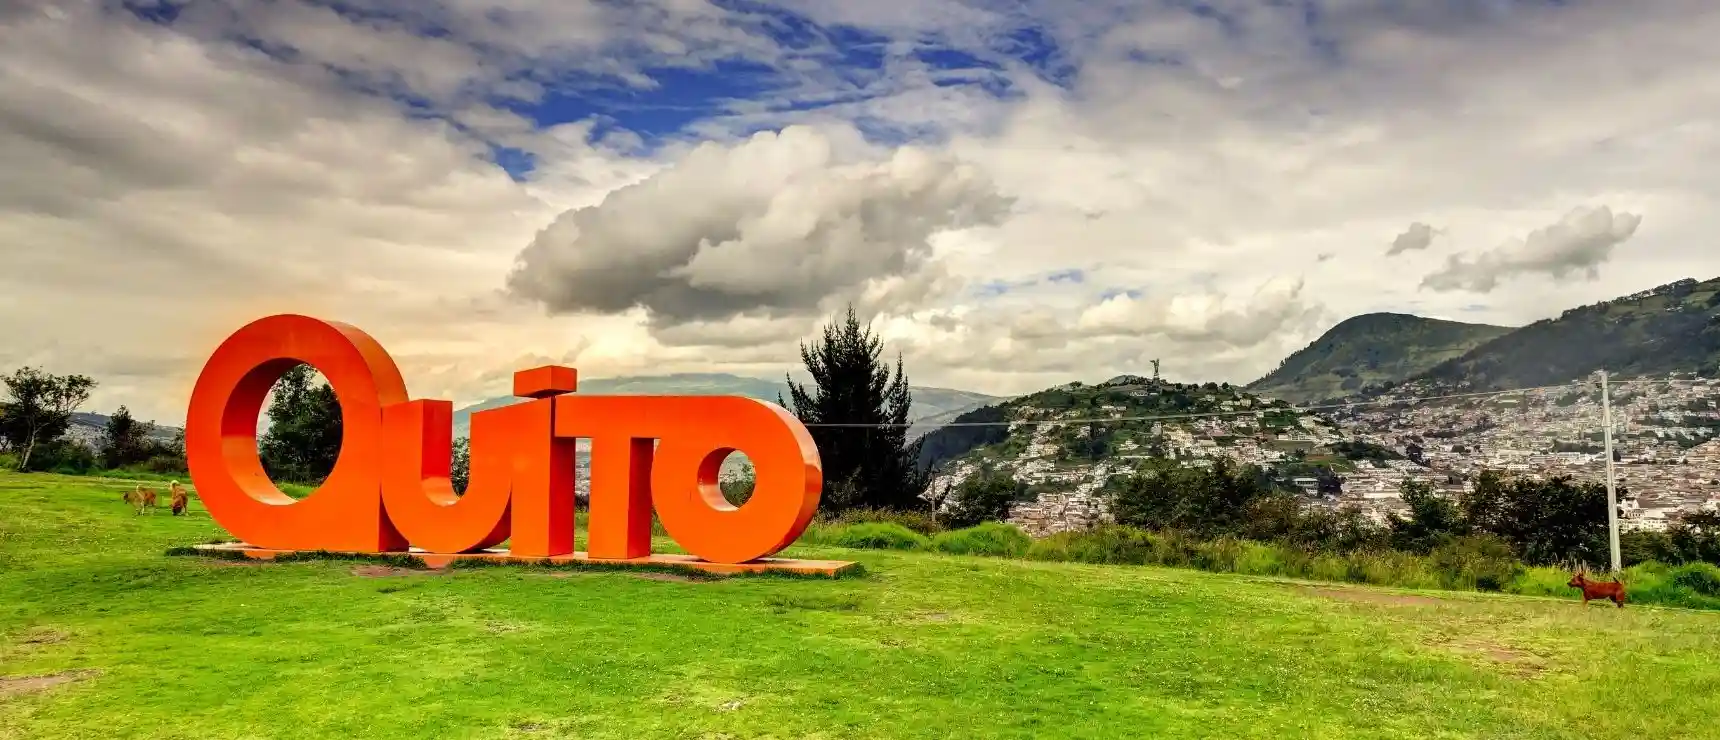 best-private-schools-quito best-private-schools-quito Best Private Schools in Quito